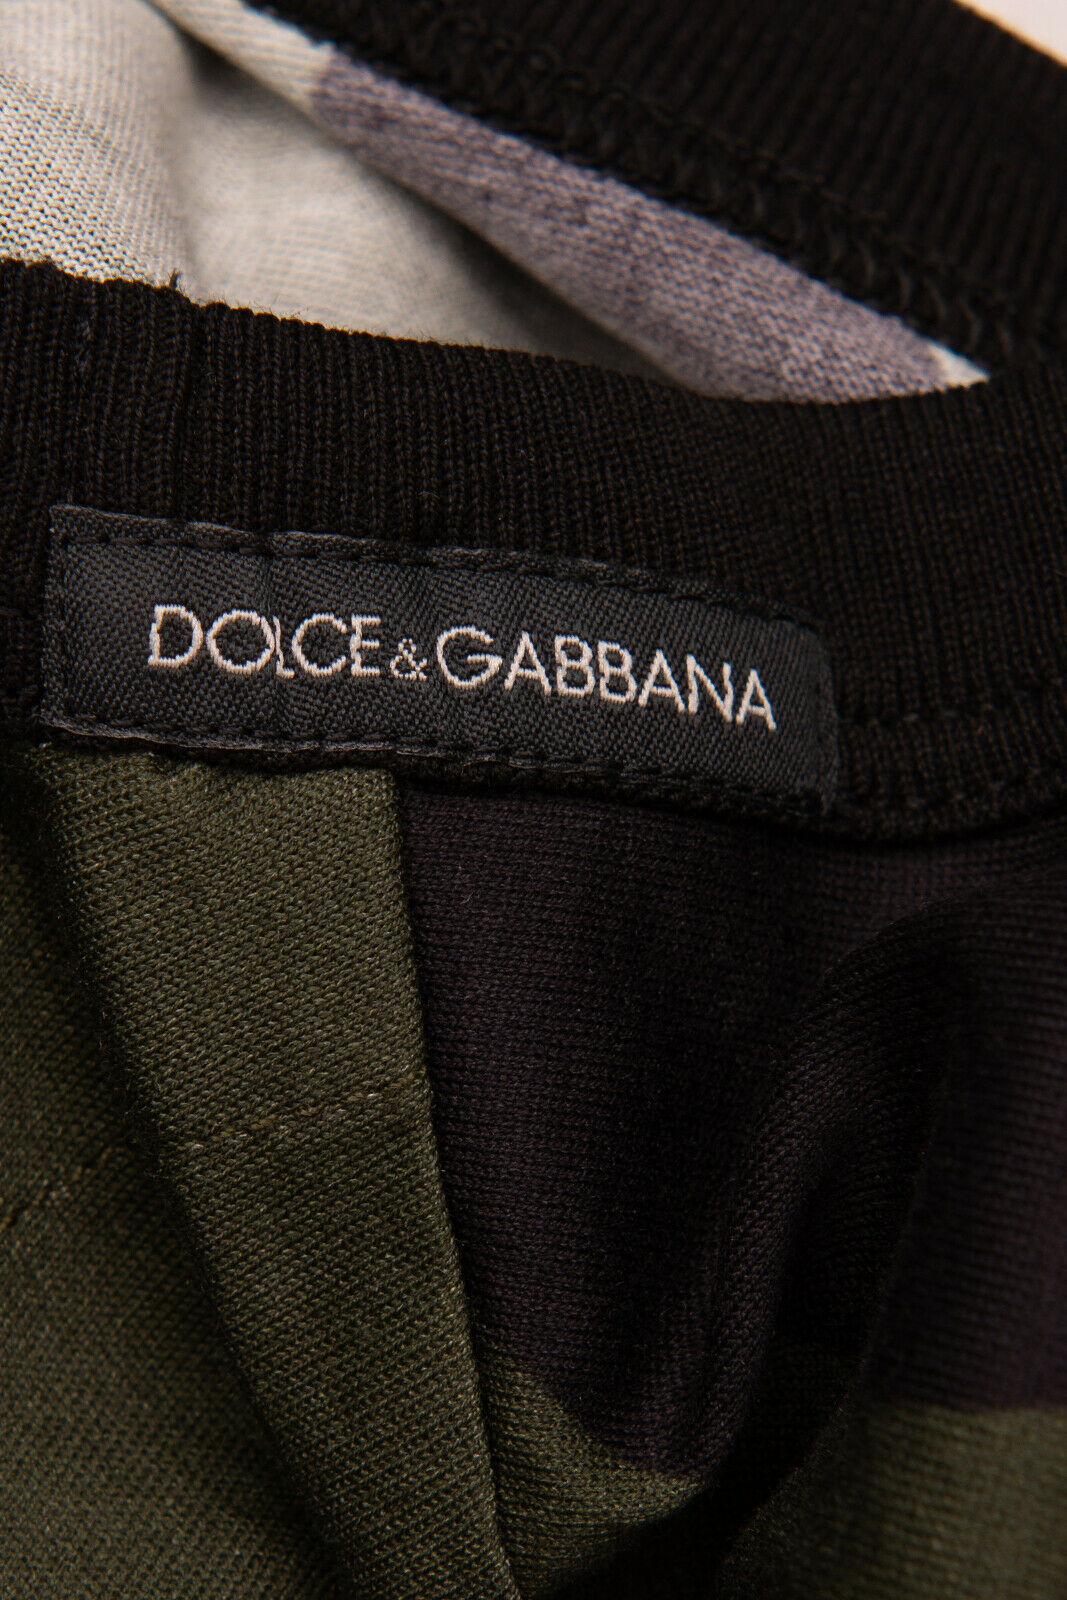 DOLCE & GABBANA T-shirt S Made in Italy